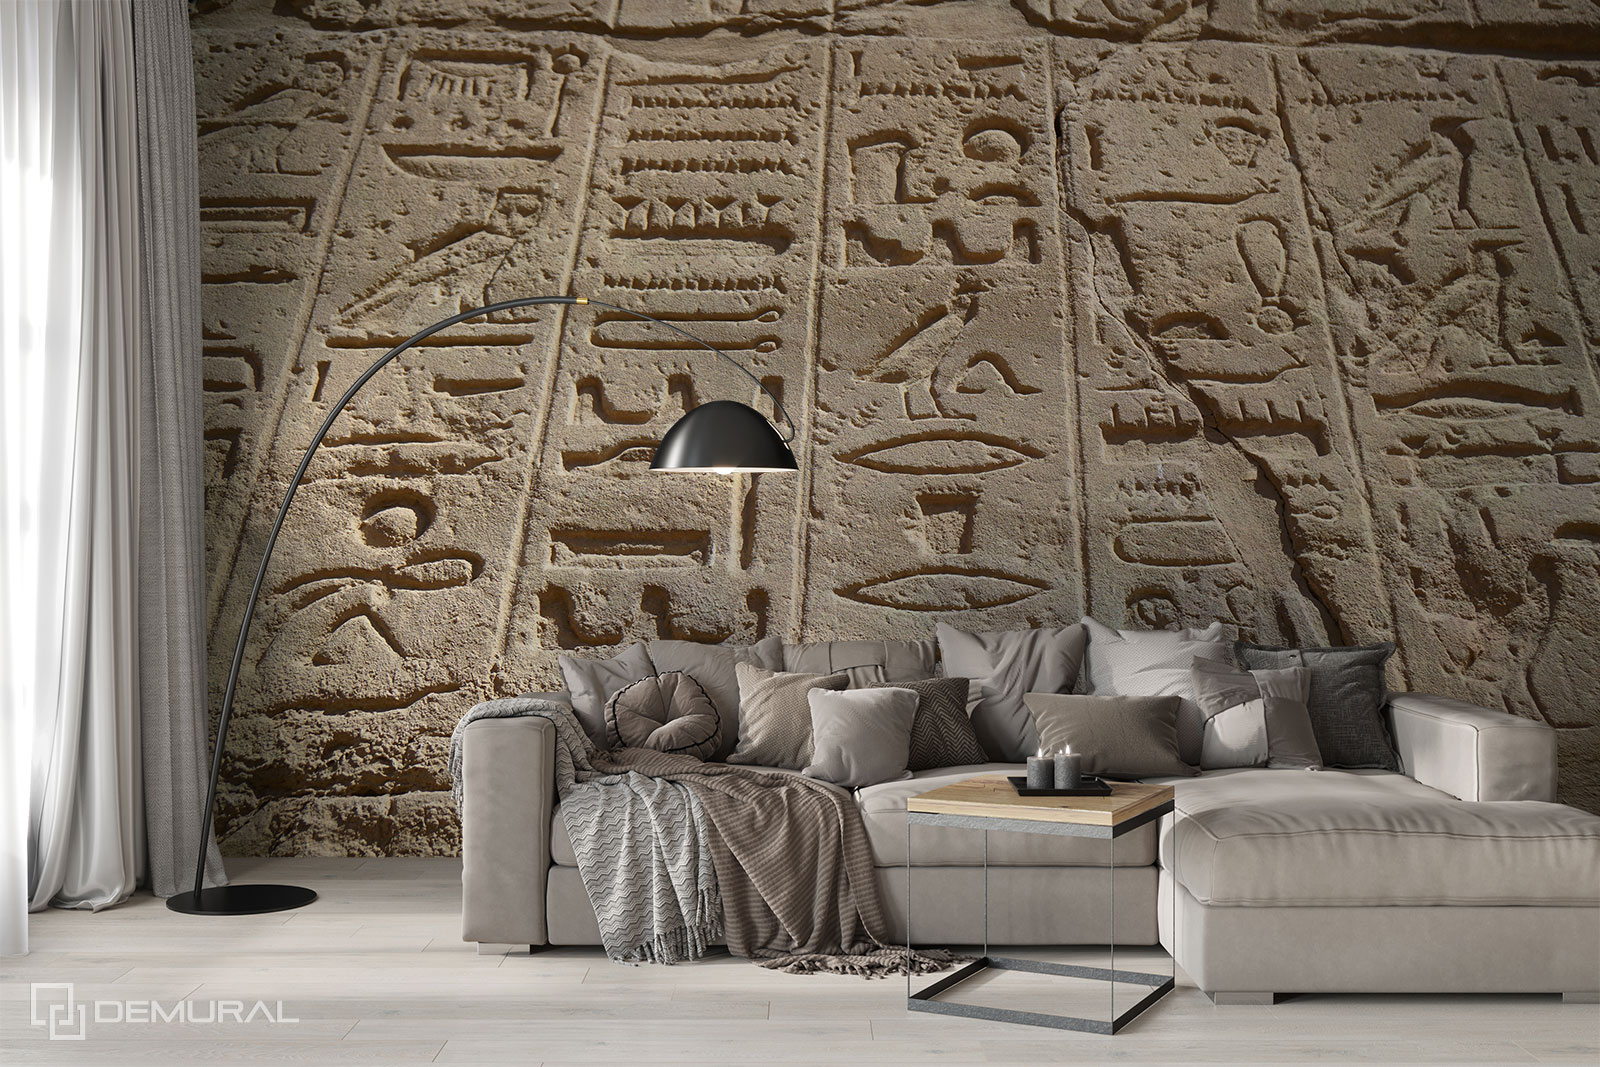 Fototapeta "Hieroglify" - Fototapety Egipt - Demural